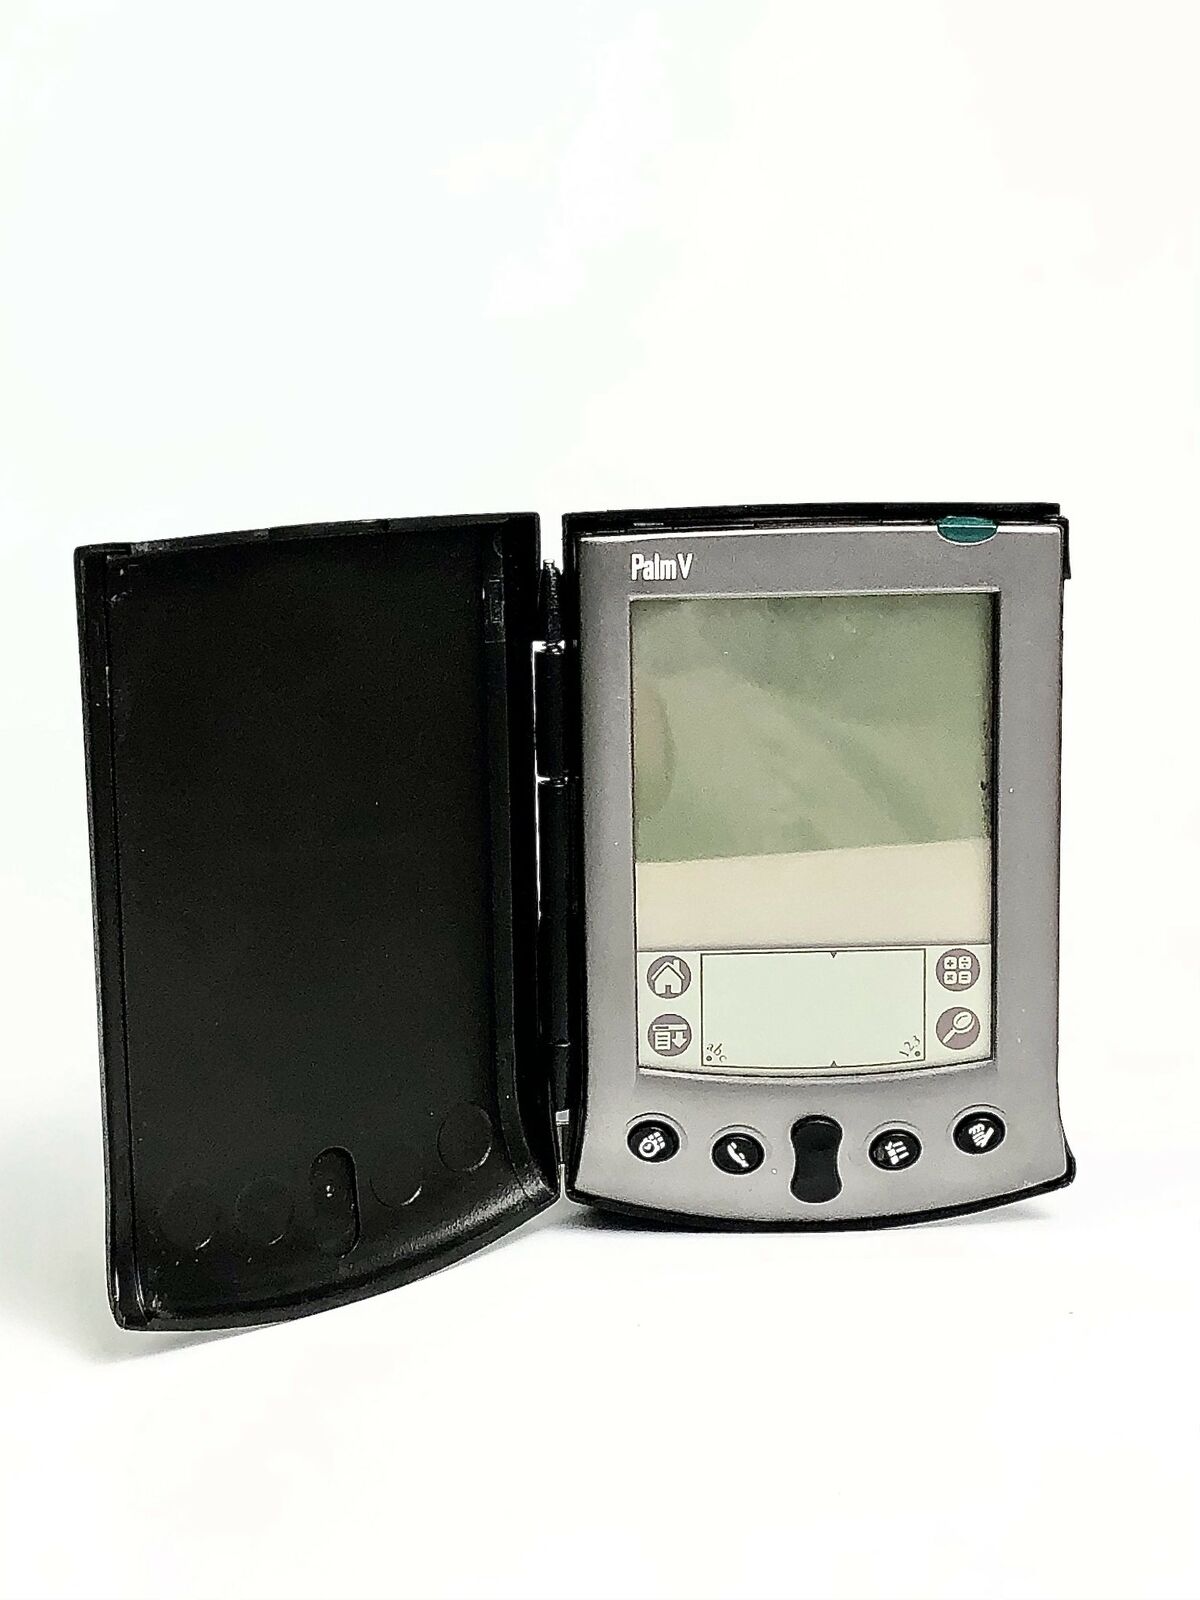 Palm V Handheld Pda Handheld Pilot Digital Organizer Stylus 40bk